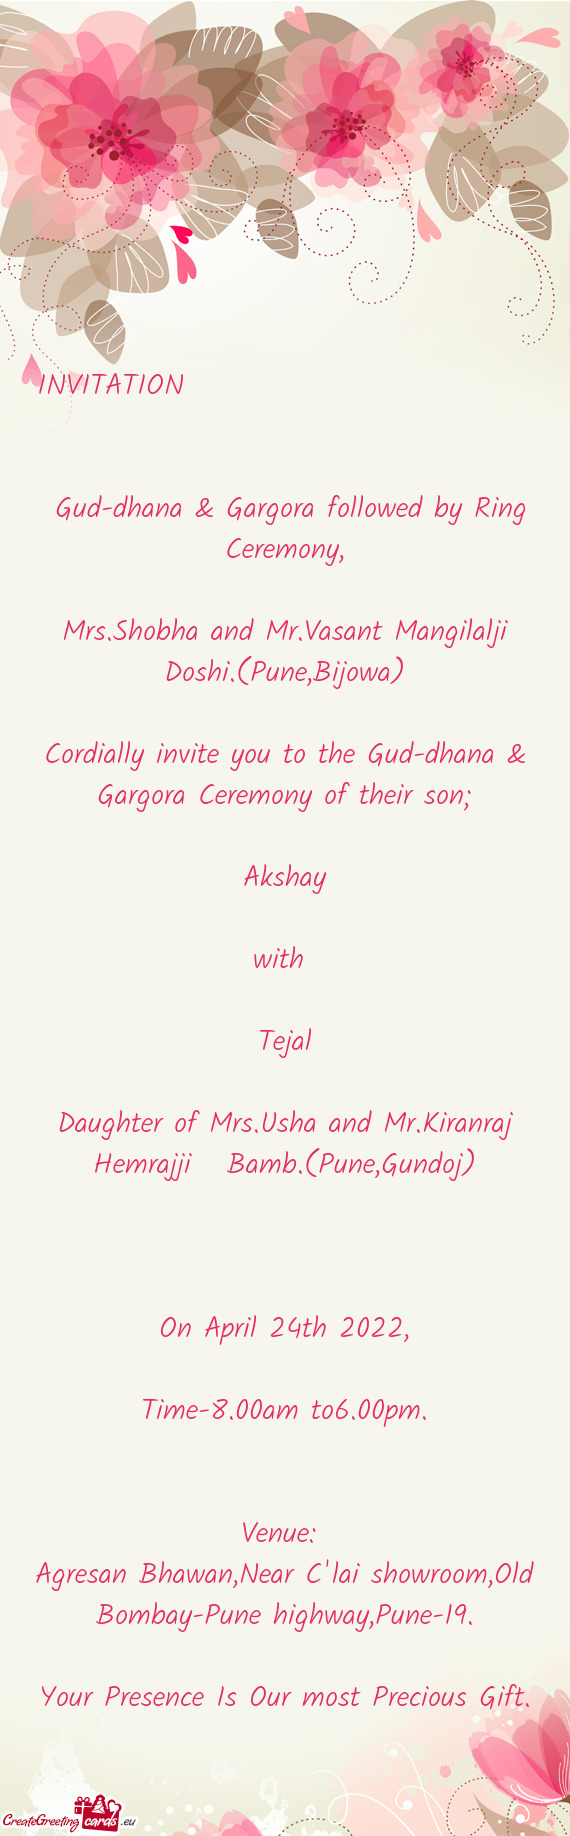 Gud-dhana & Gargora followed by Ring Ceremony